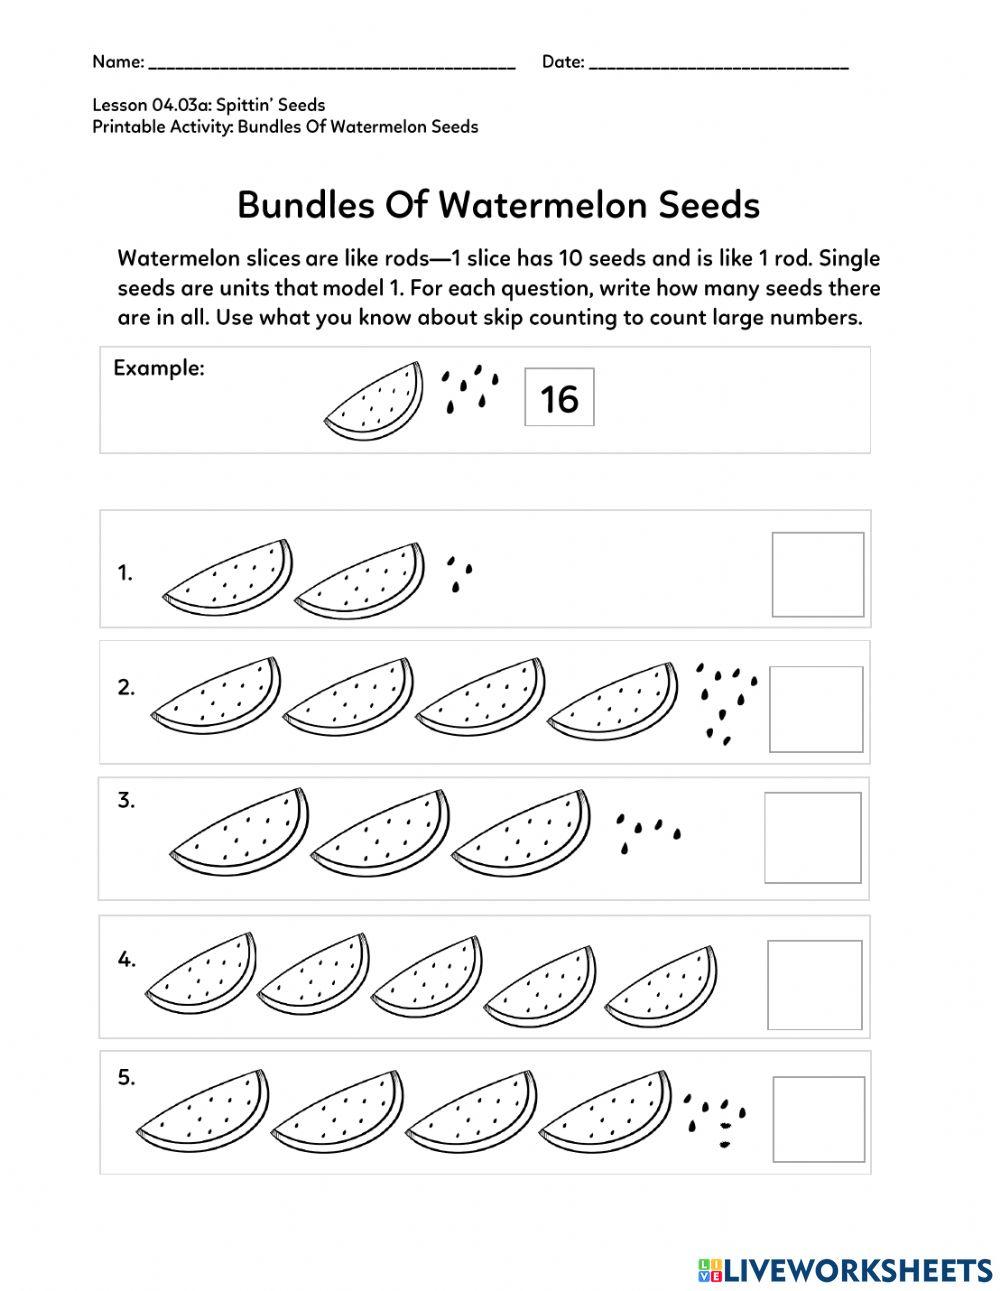 Bundles of Watermelon Seeds